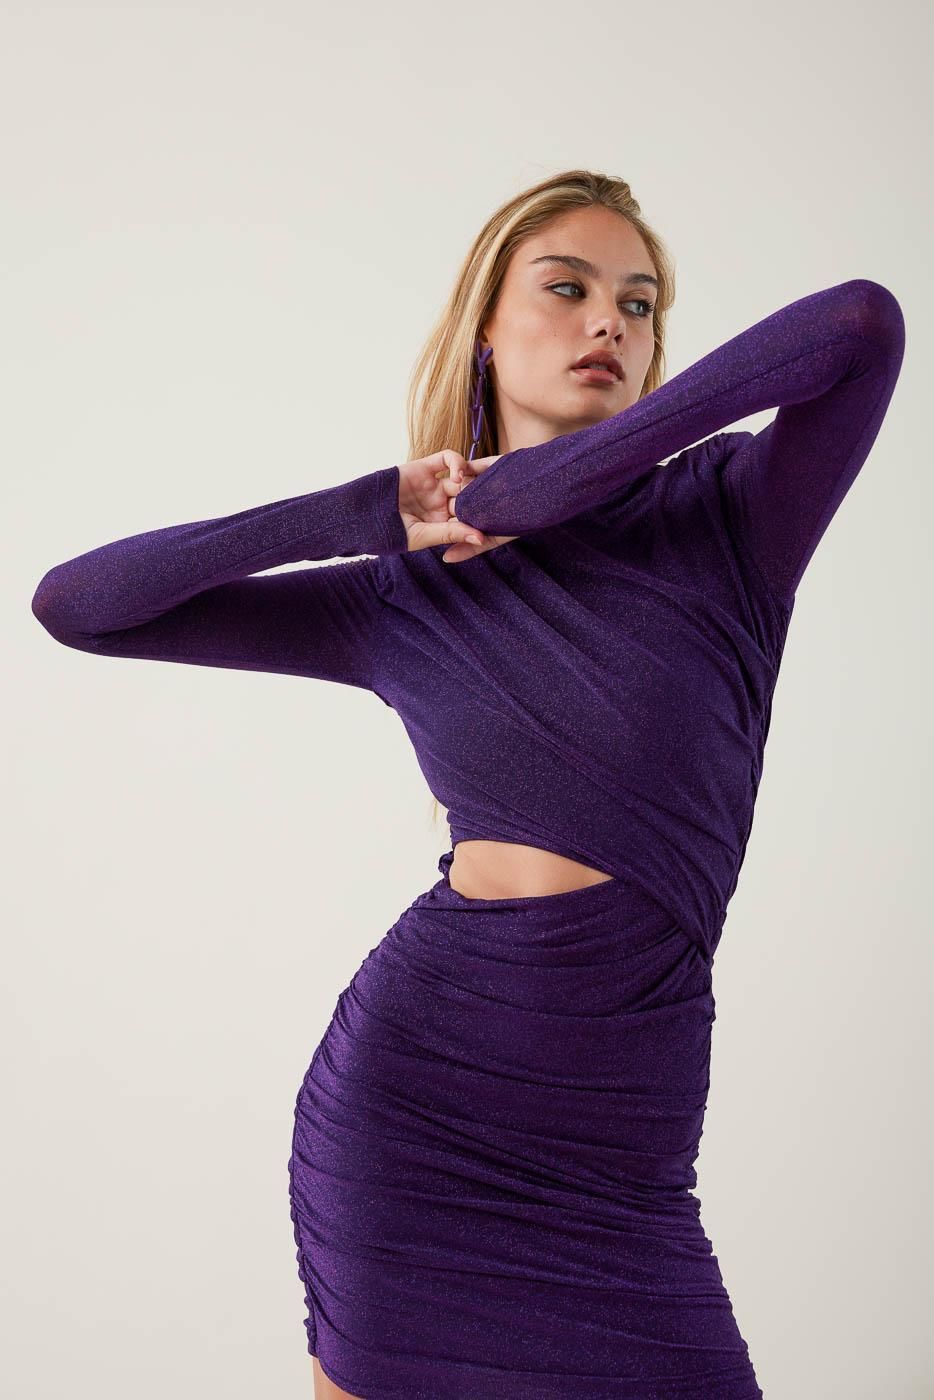 Vestido Ariana violeta s